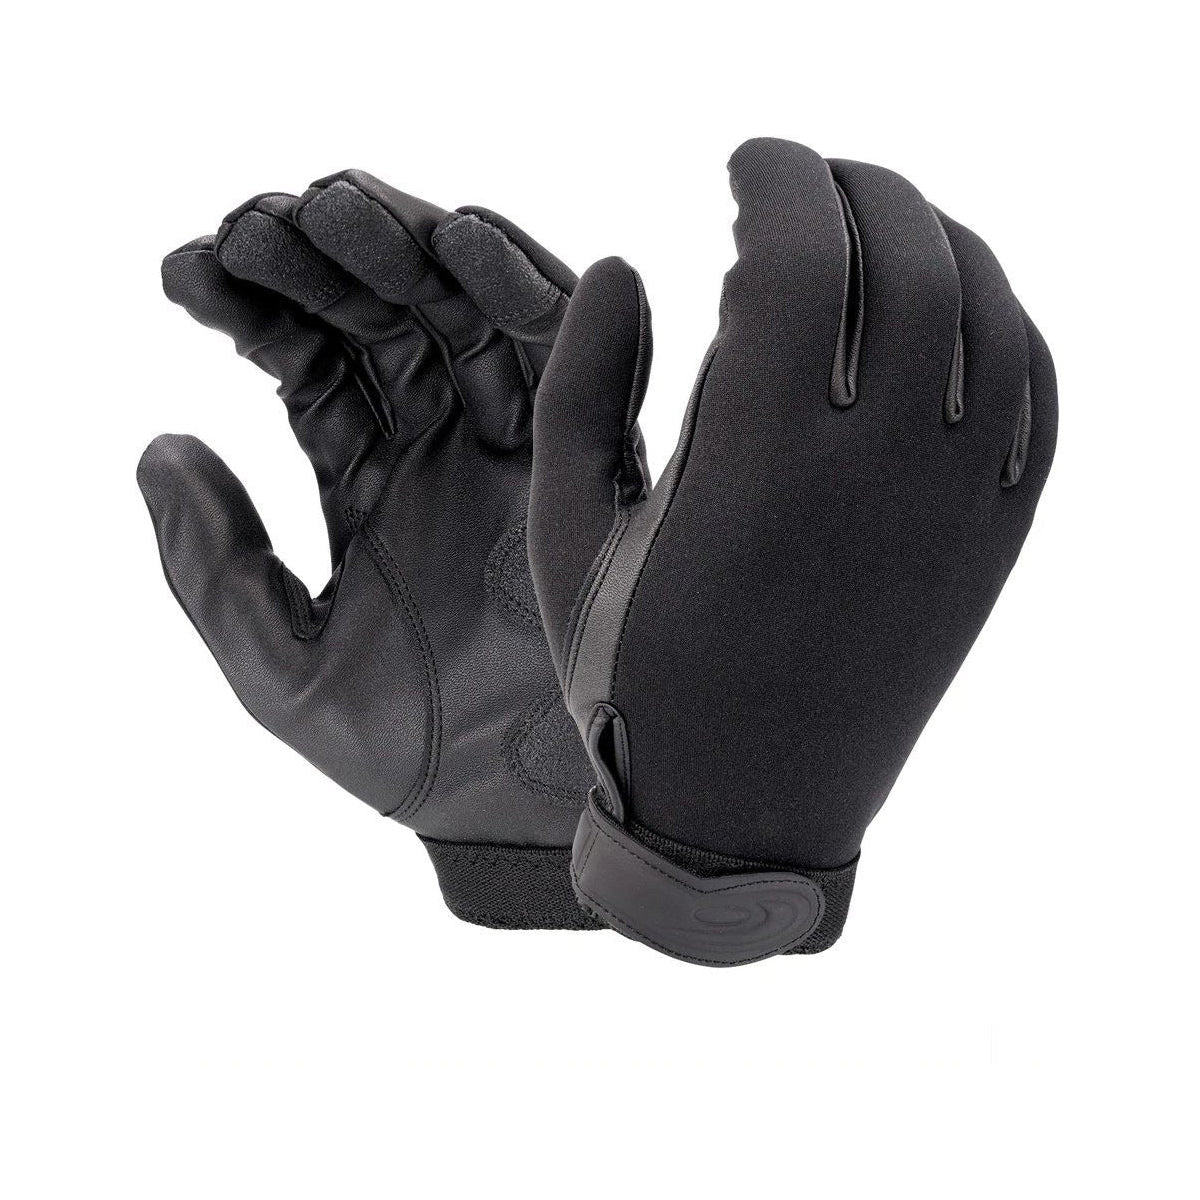 Hatch All-Weather Neoprene Winter Shooting/Duty Gloves